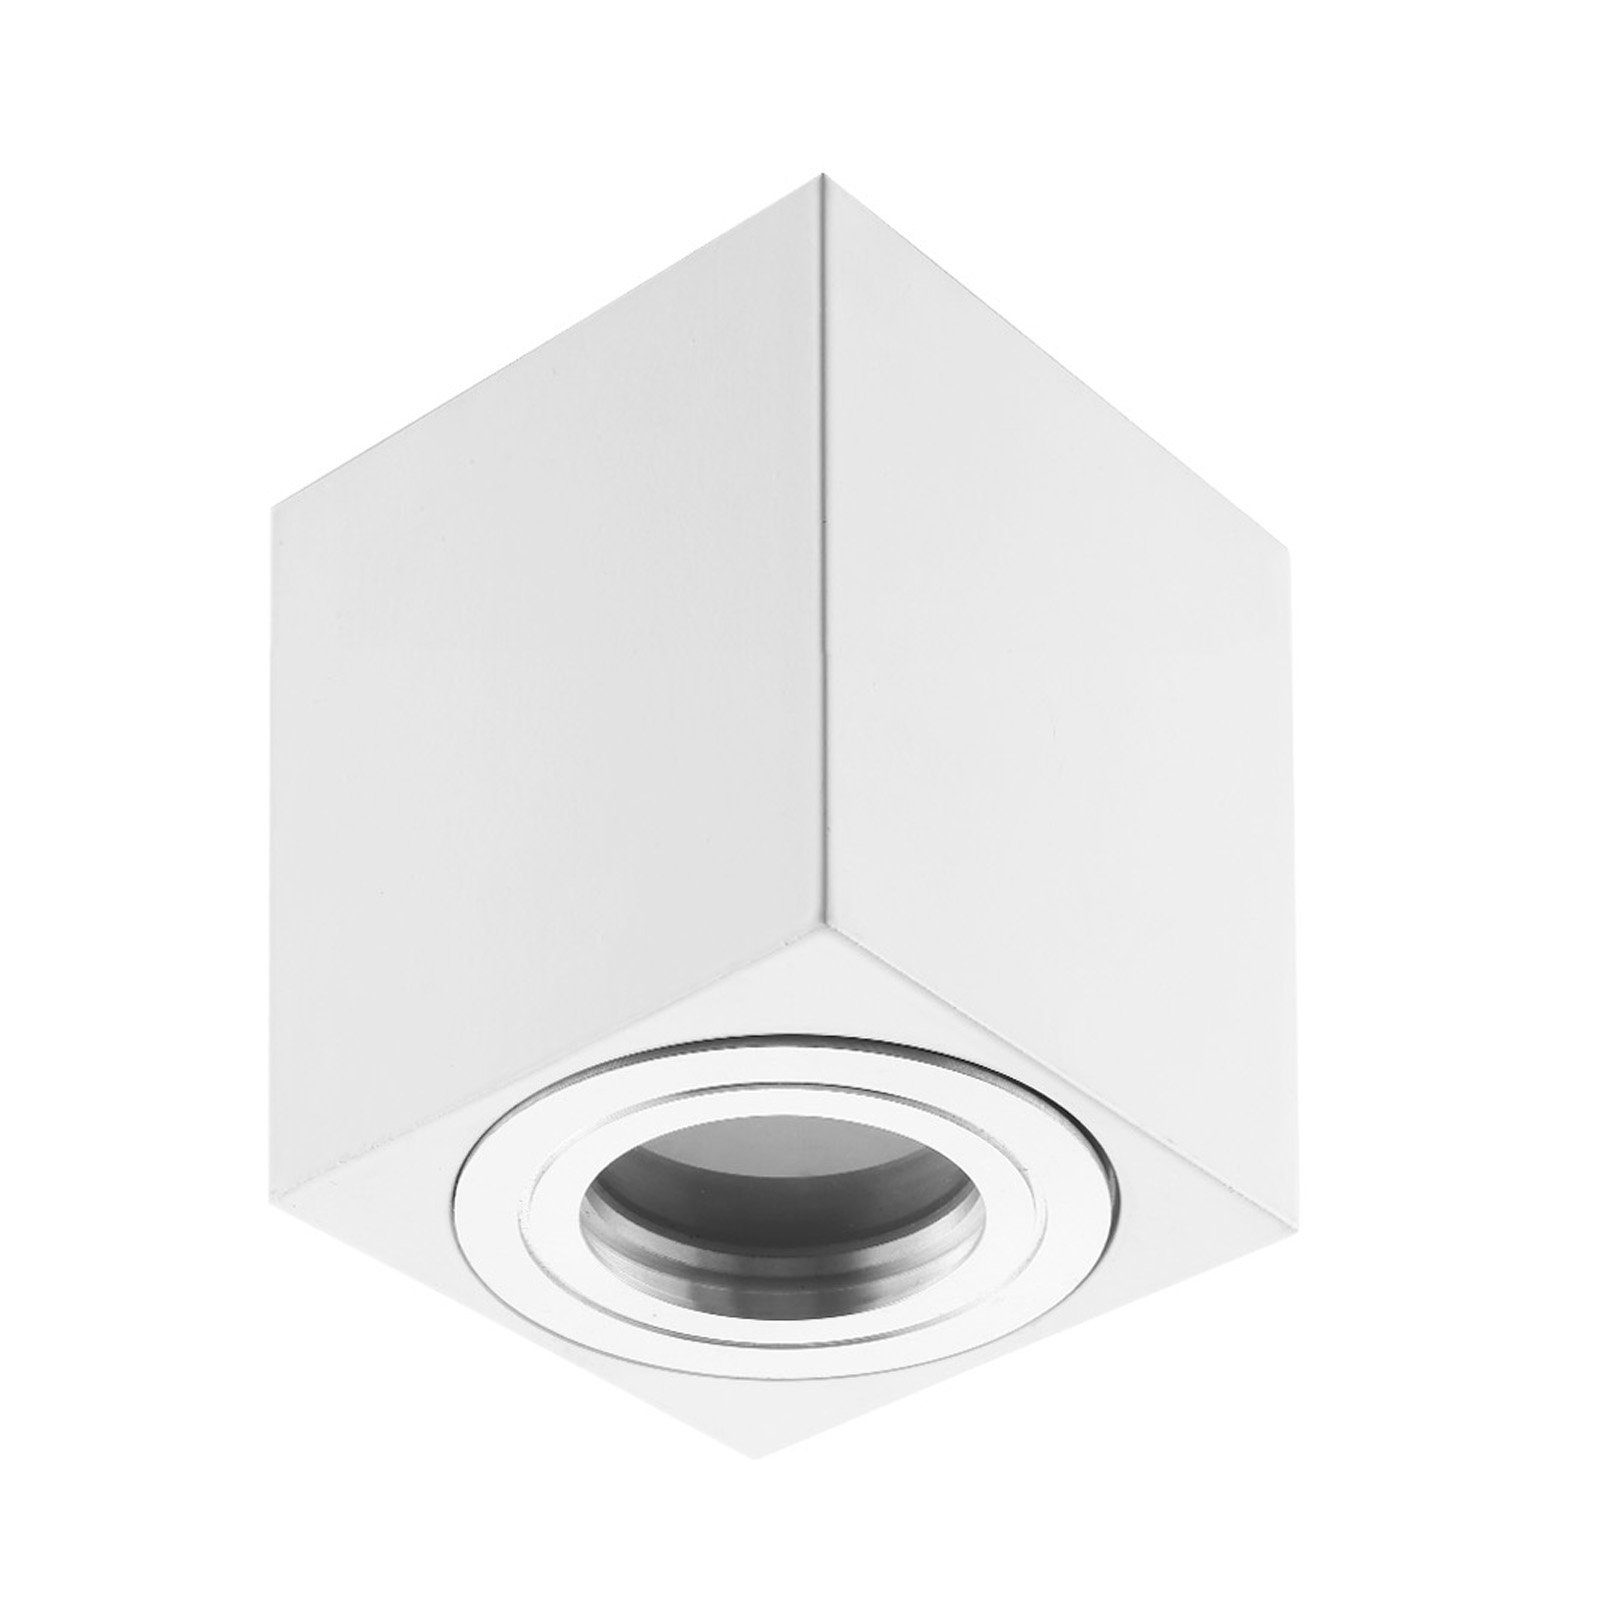 Sweet LED Aufbauleuchte flach Bad eckig Aluminium weiß chrom IP44 deckenspot Badezimmer, ohne Leuchtmittel, Aufbaustrahler LED, Aufbauspot